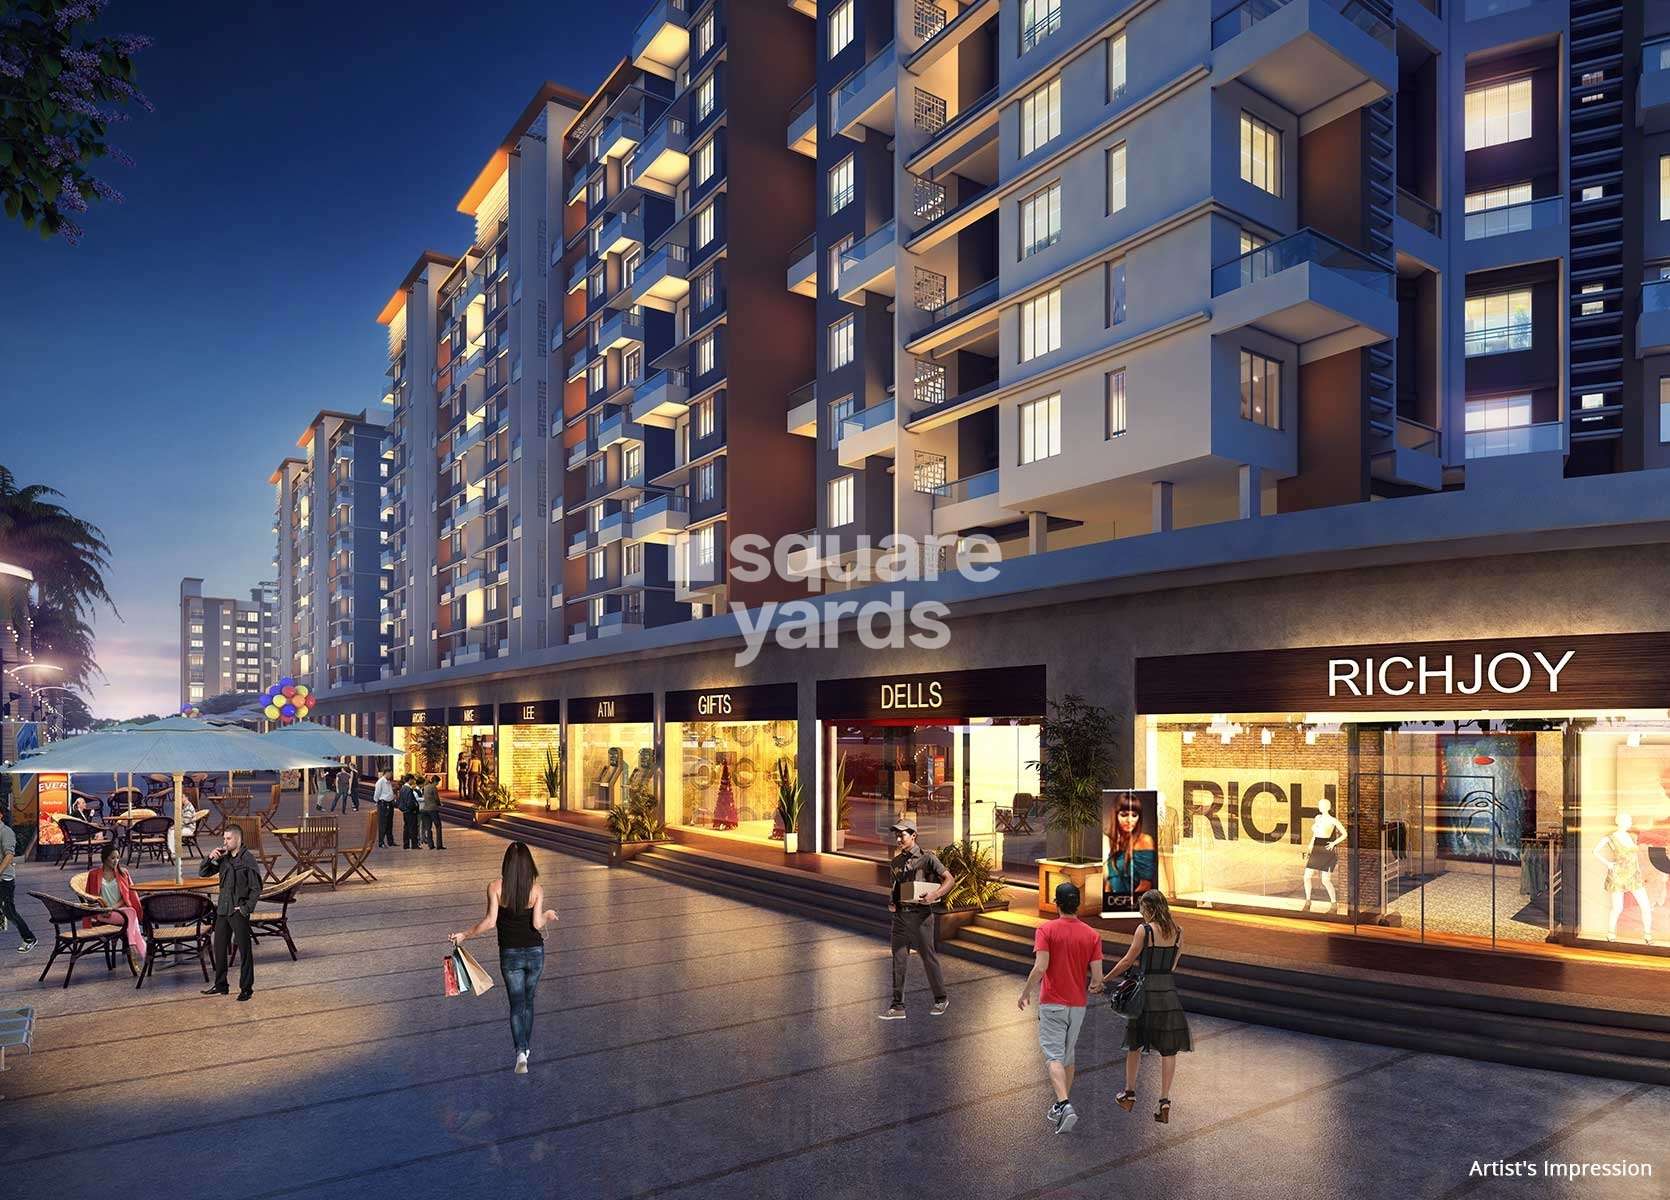 kolte patil western avenue project amenities features10